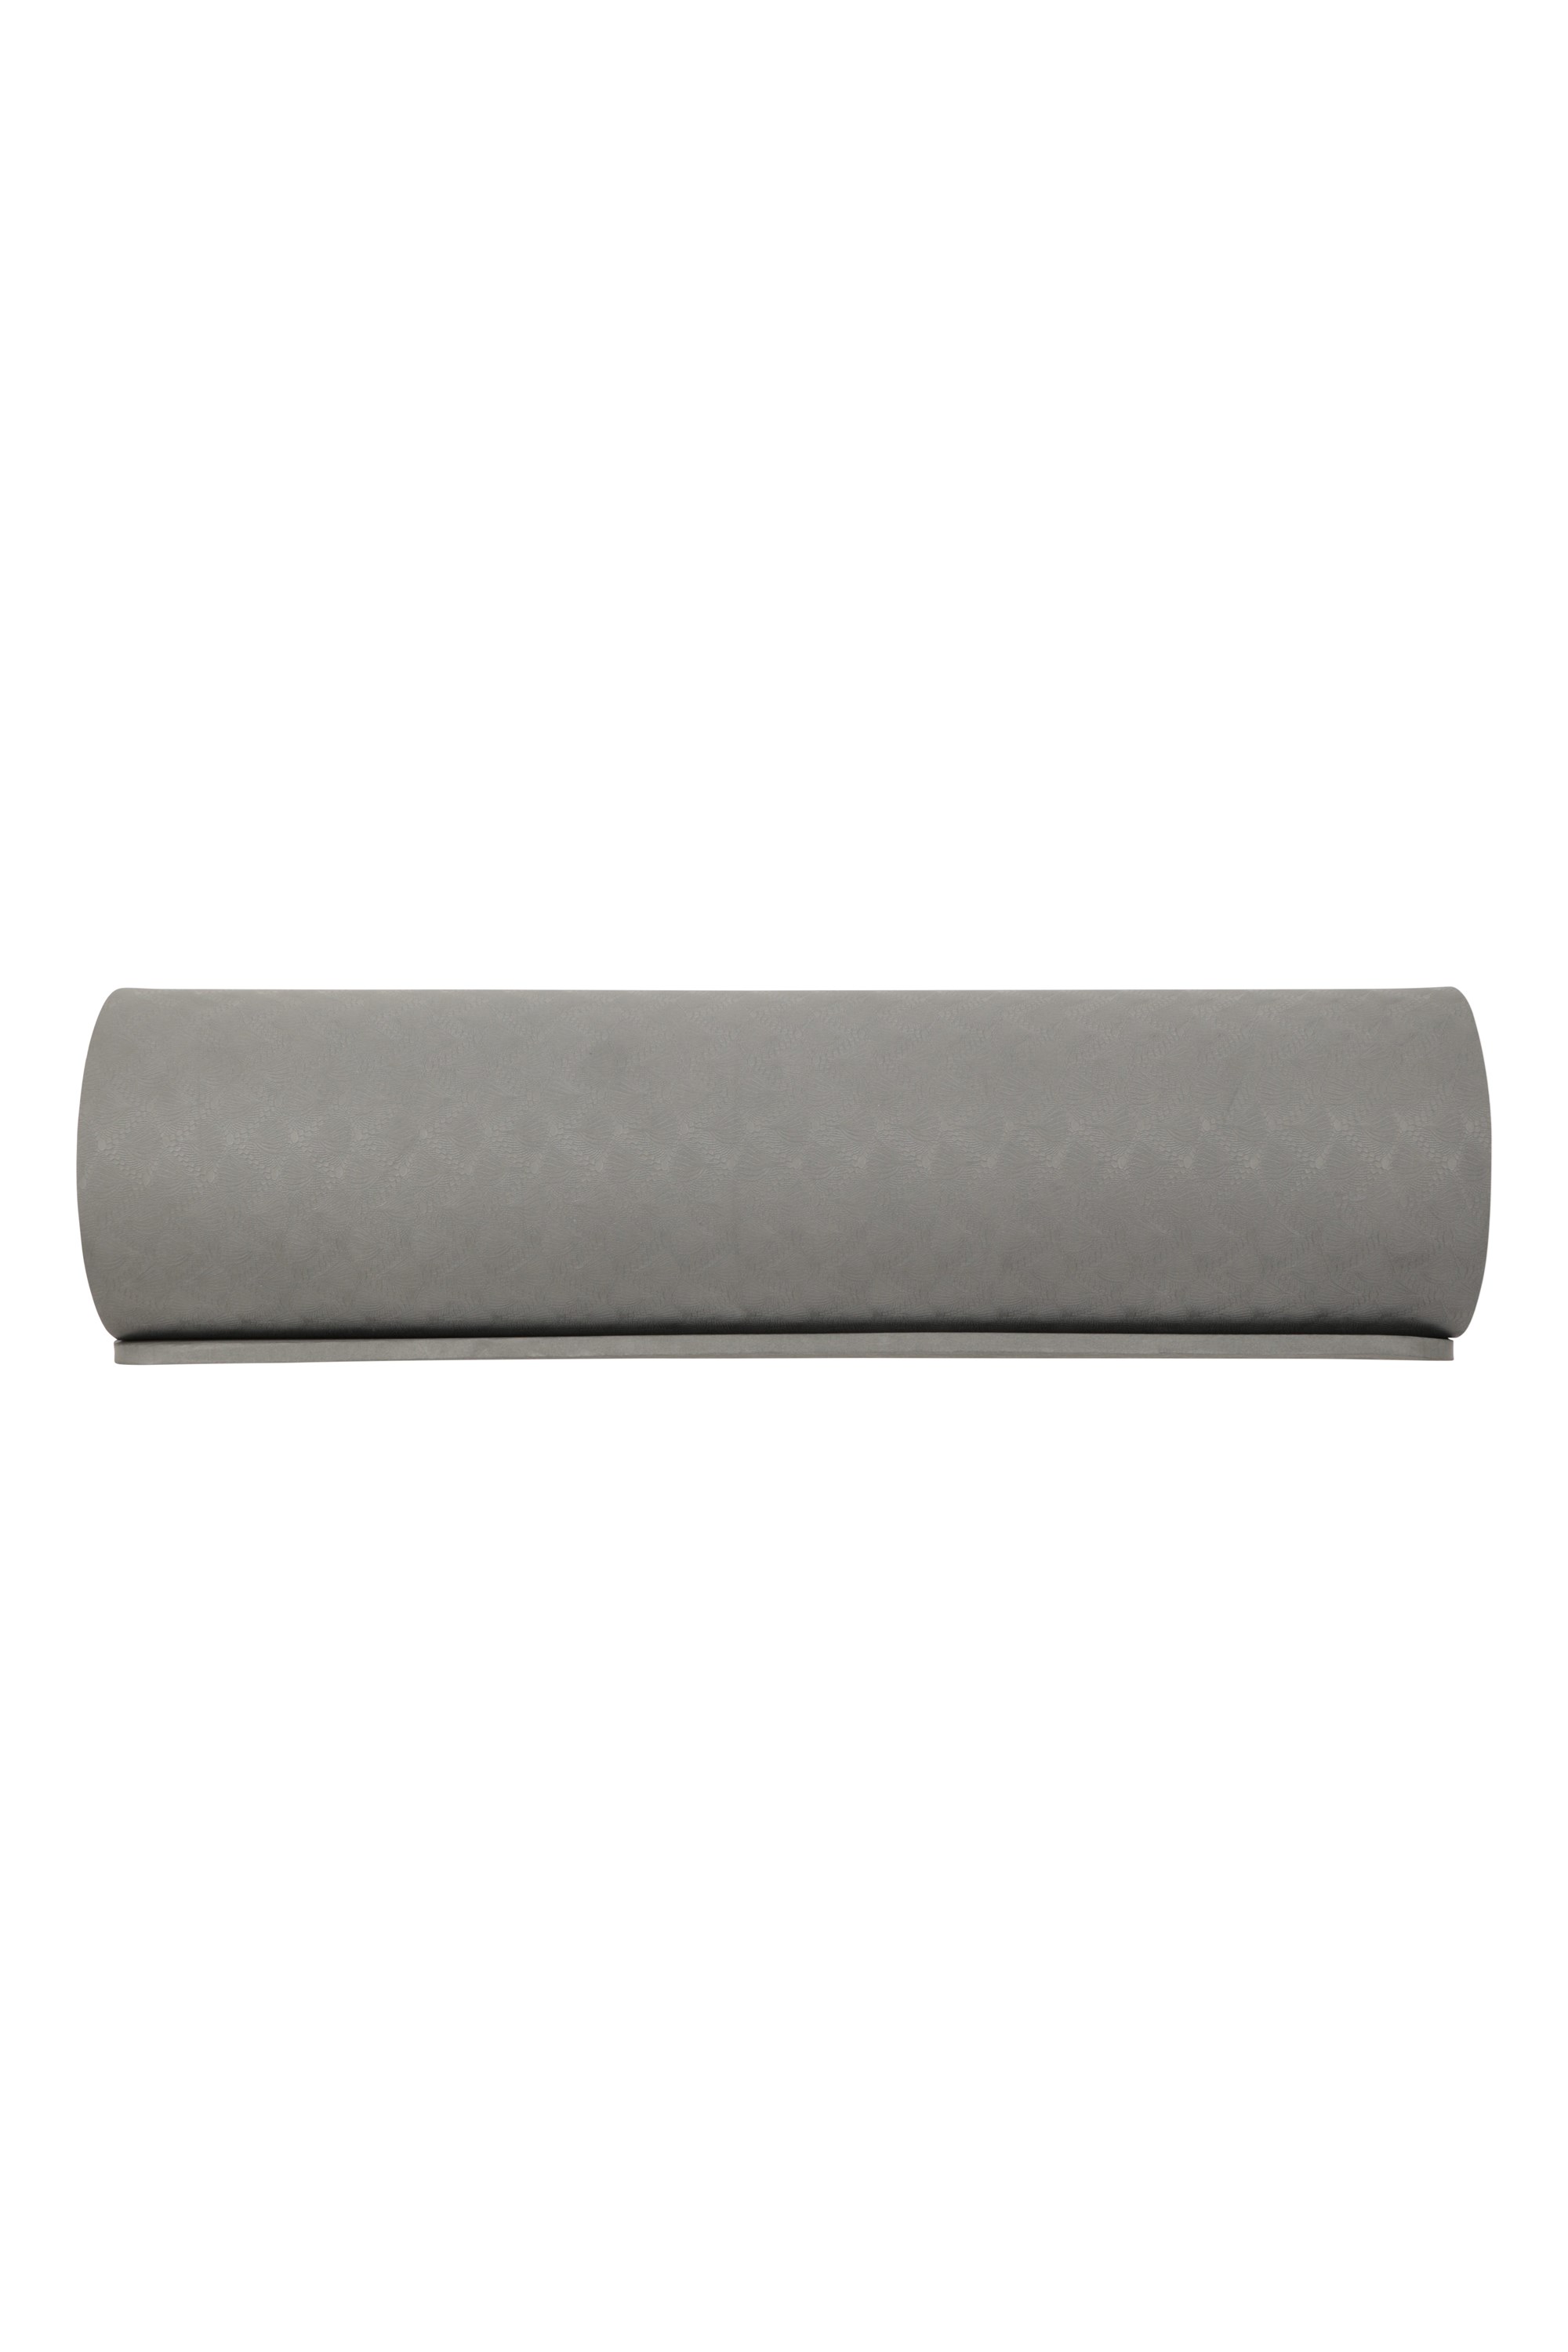 Mountain warehouse grey one size yoga mat RRP £20 